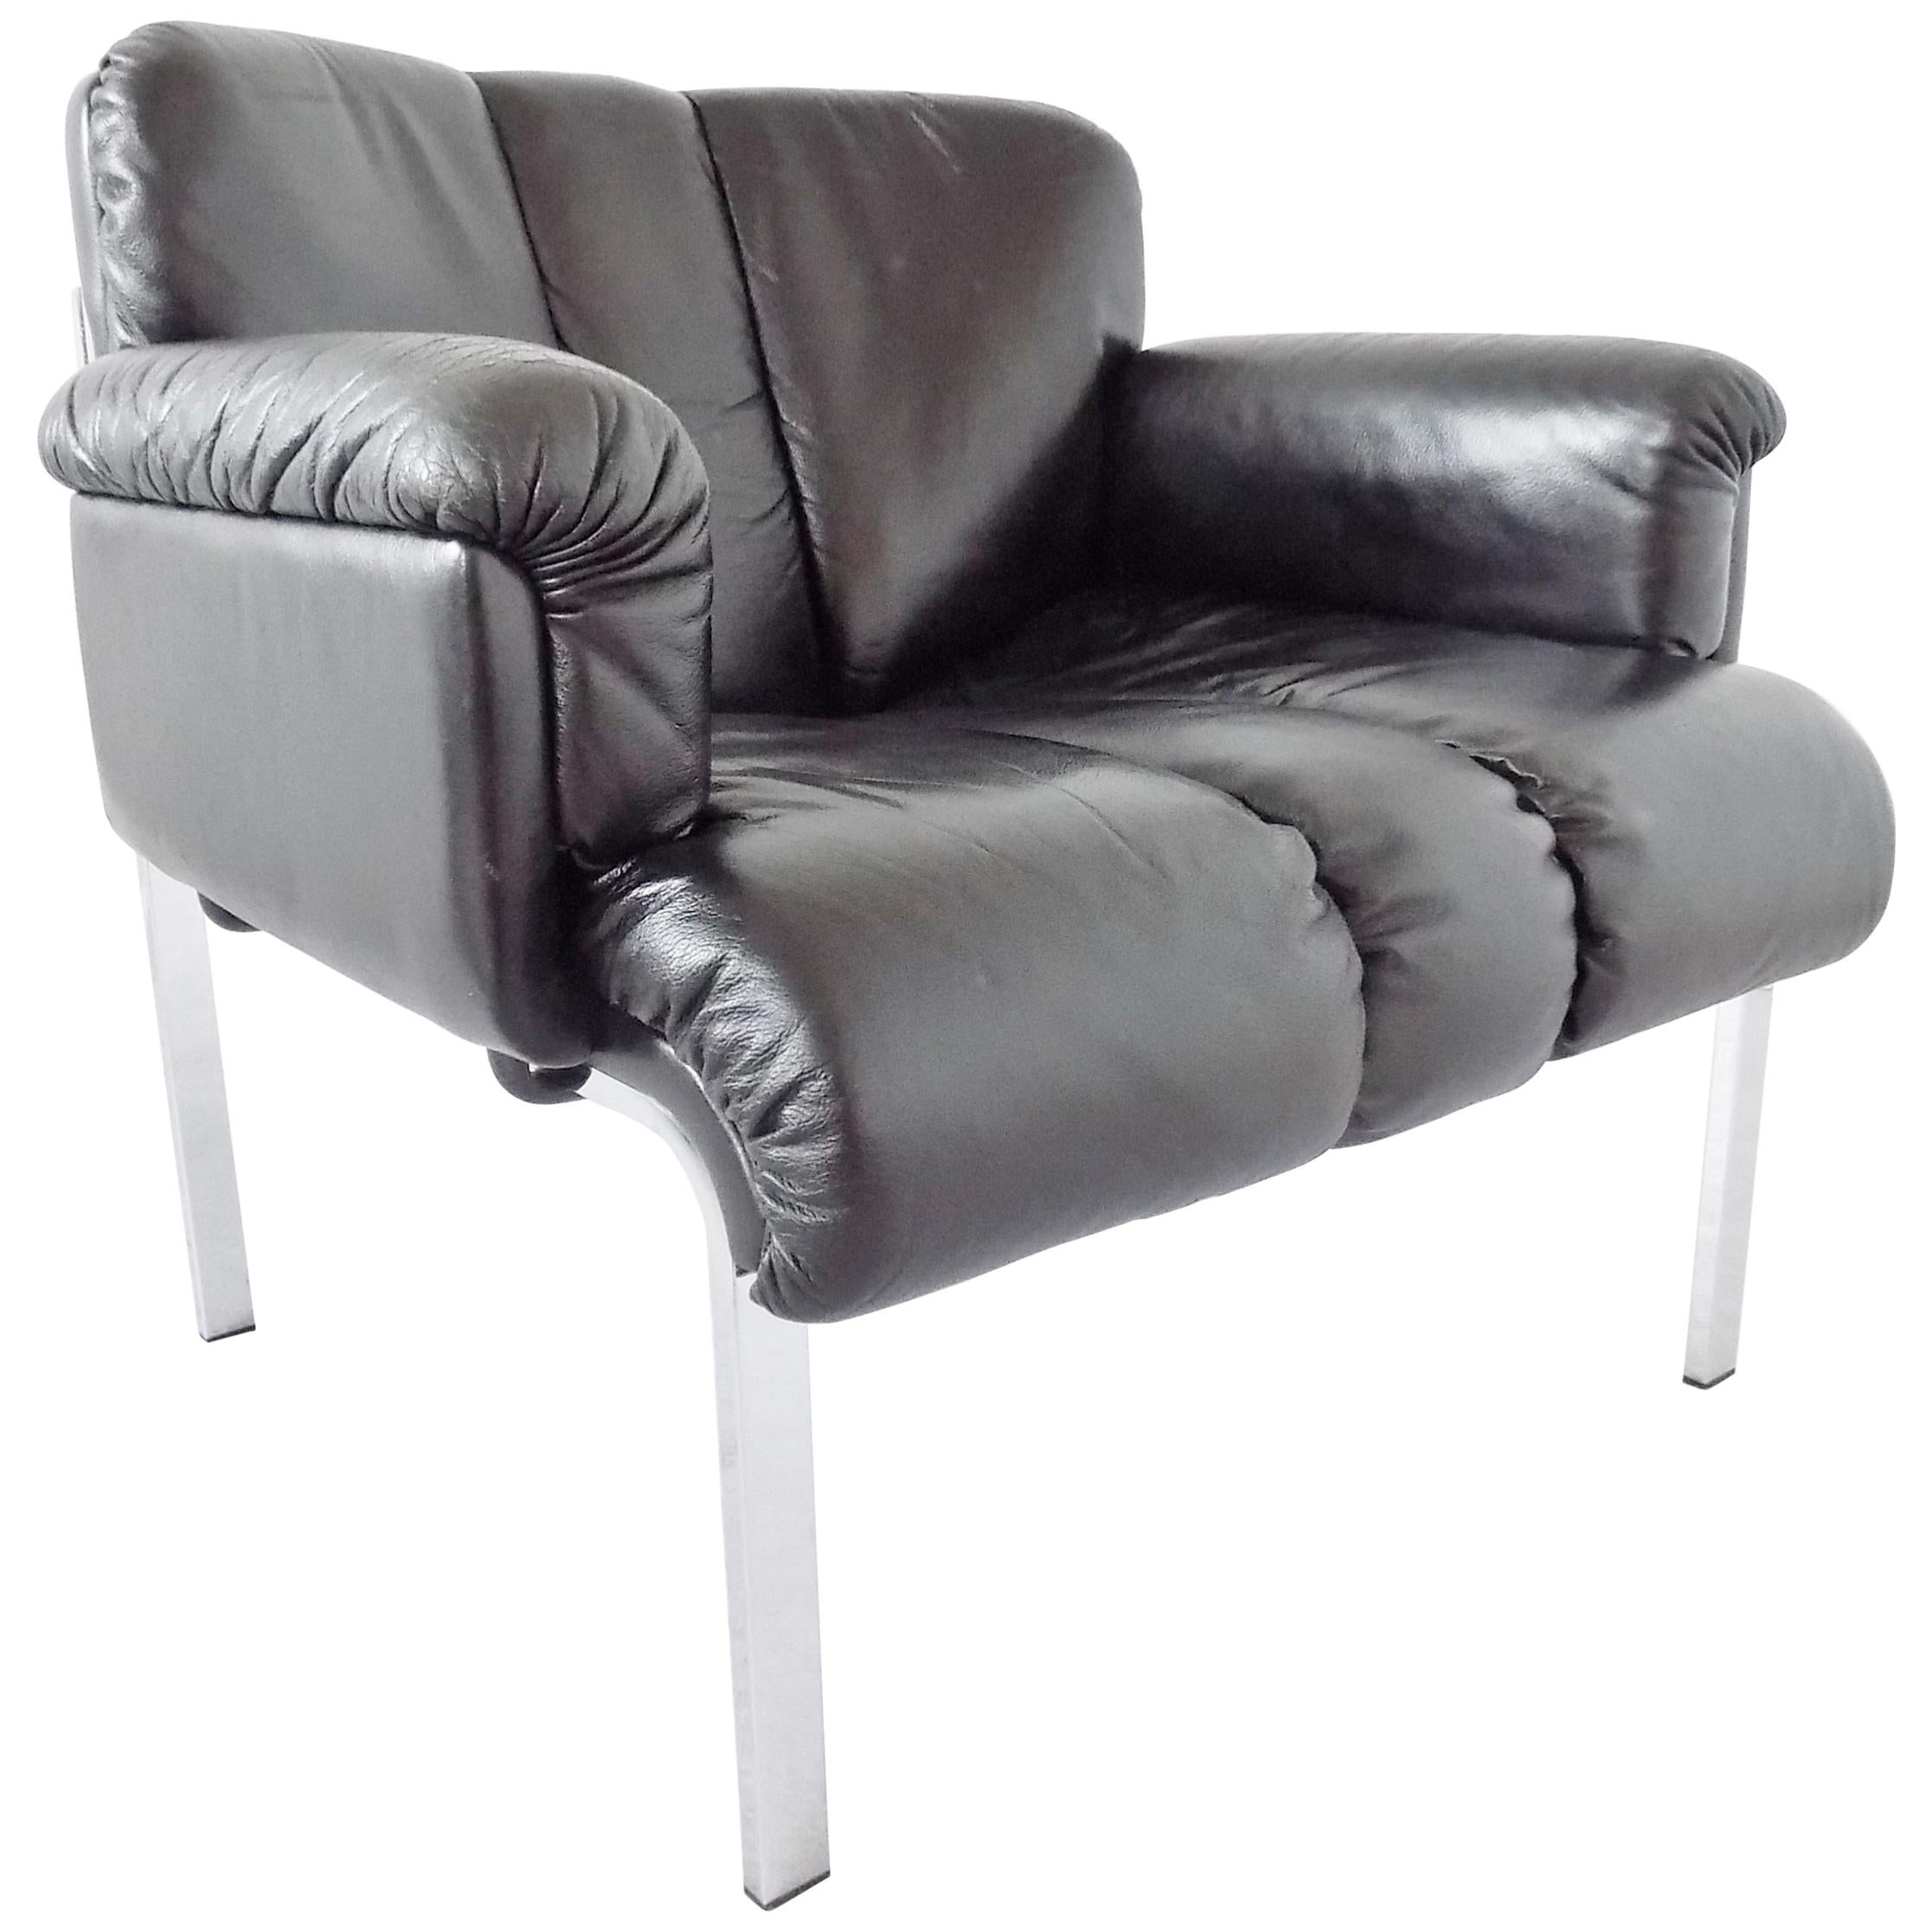 Girsberger Eurochair Black Leather Lounge Chair, Swiss made, Mid-Century modern For Sale